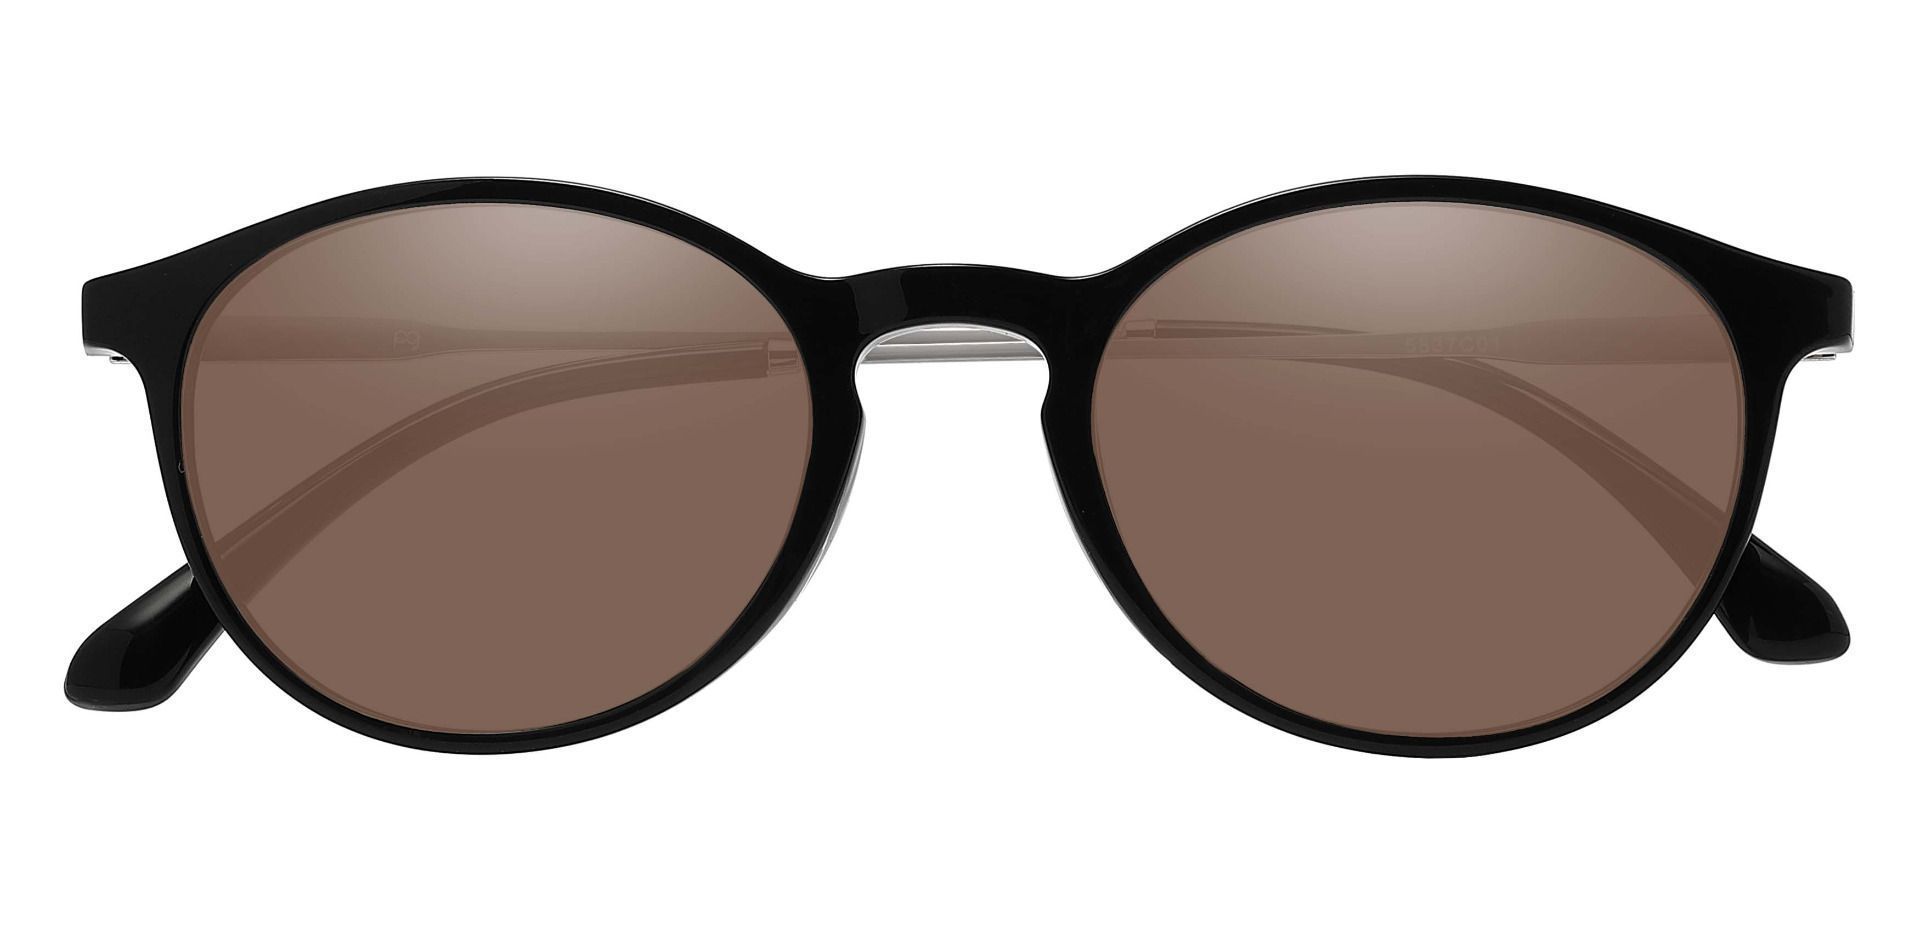 Felton Oval Non-Rx Sunglasses - Black Frame With Brown Lenses